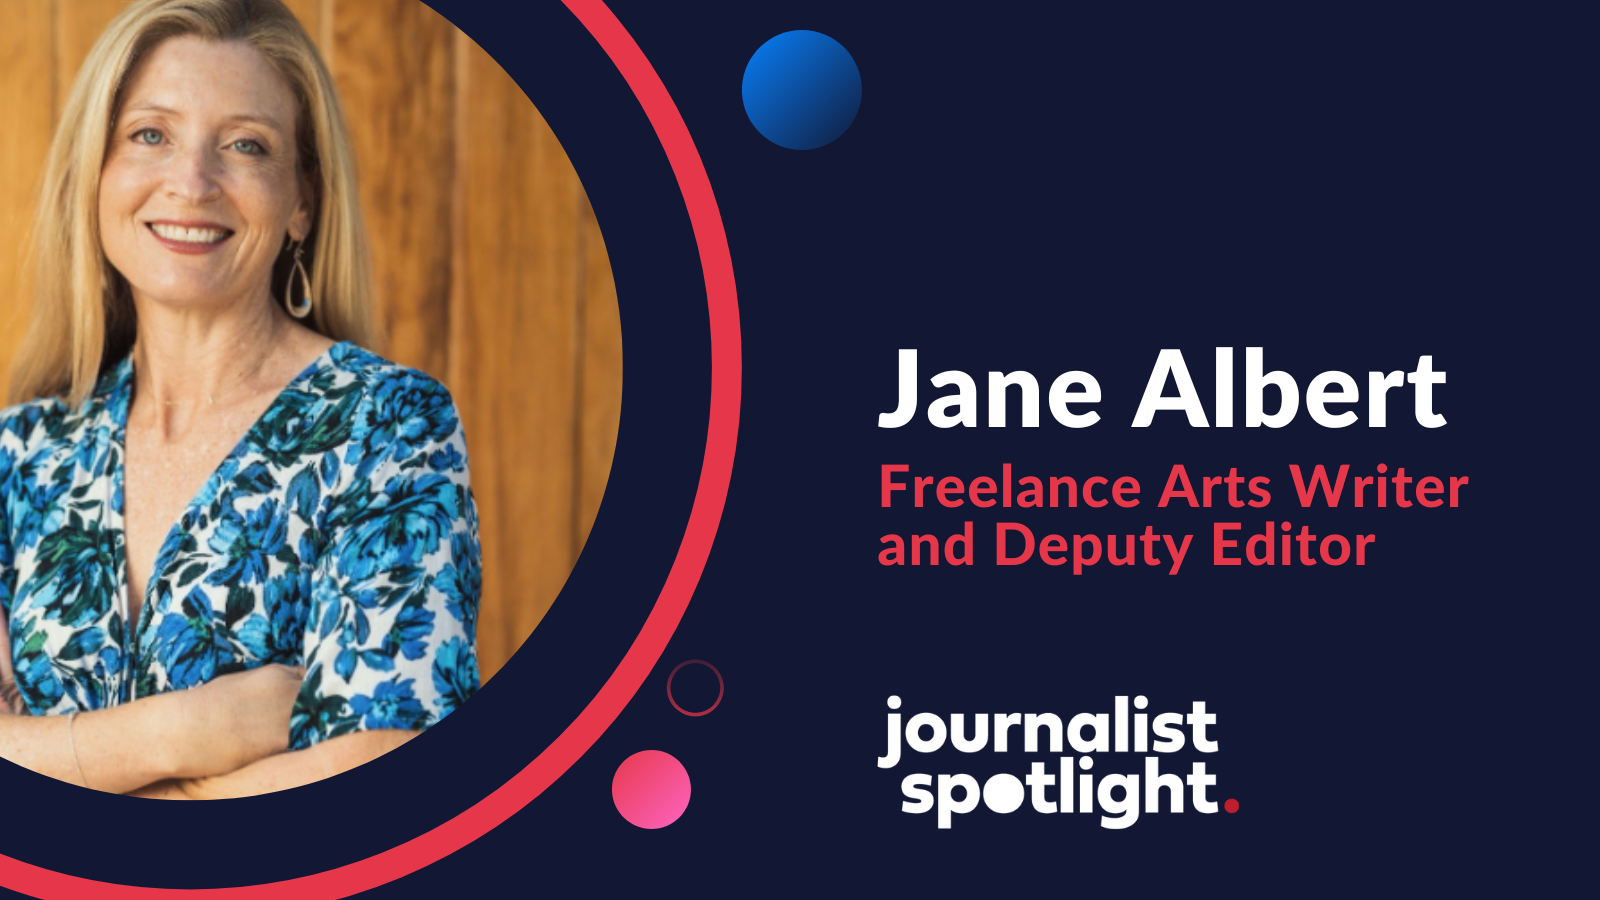 Journalist Spotlight | Interview with Jane Albert, a Freelance Arts Writer and Deputy Editor